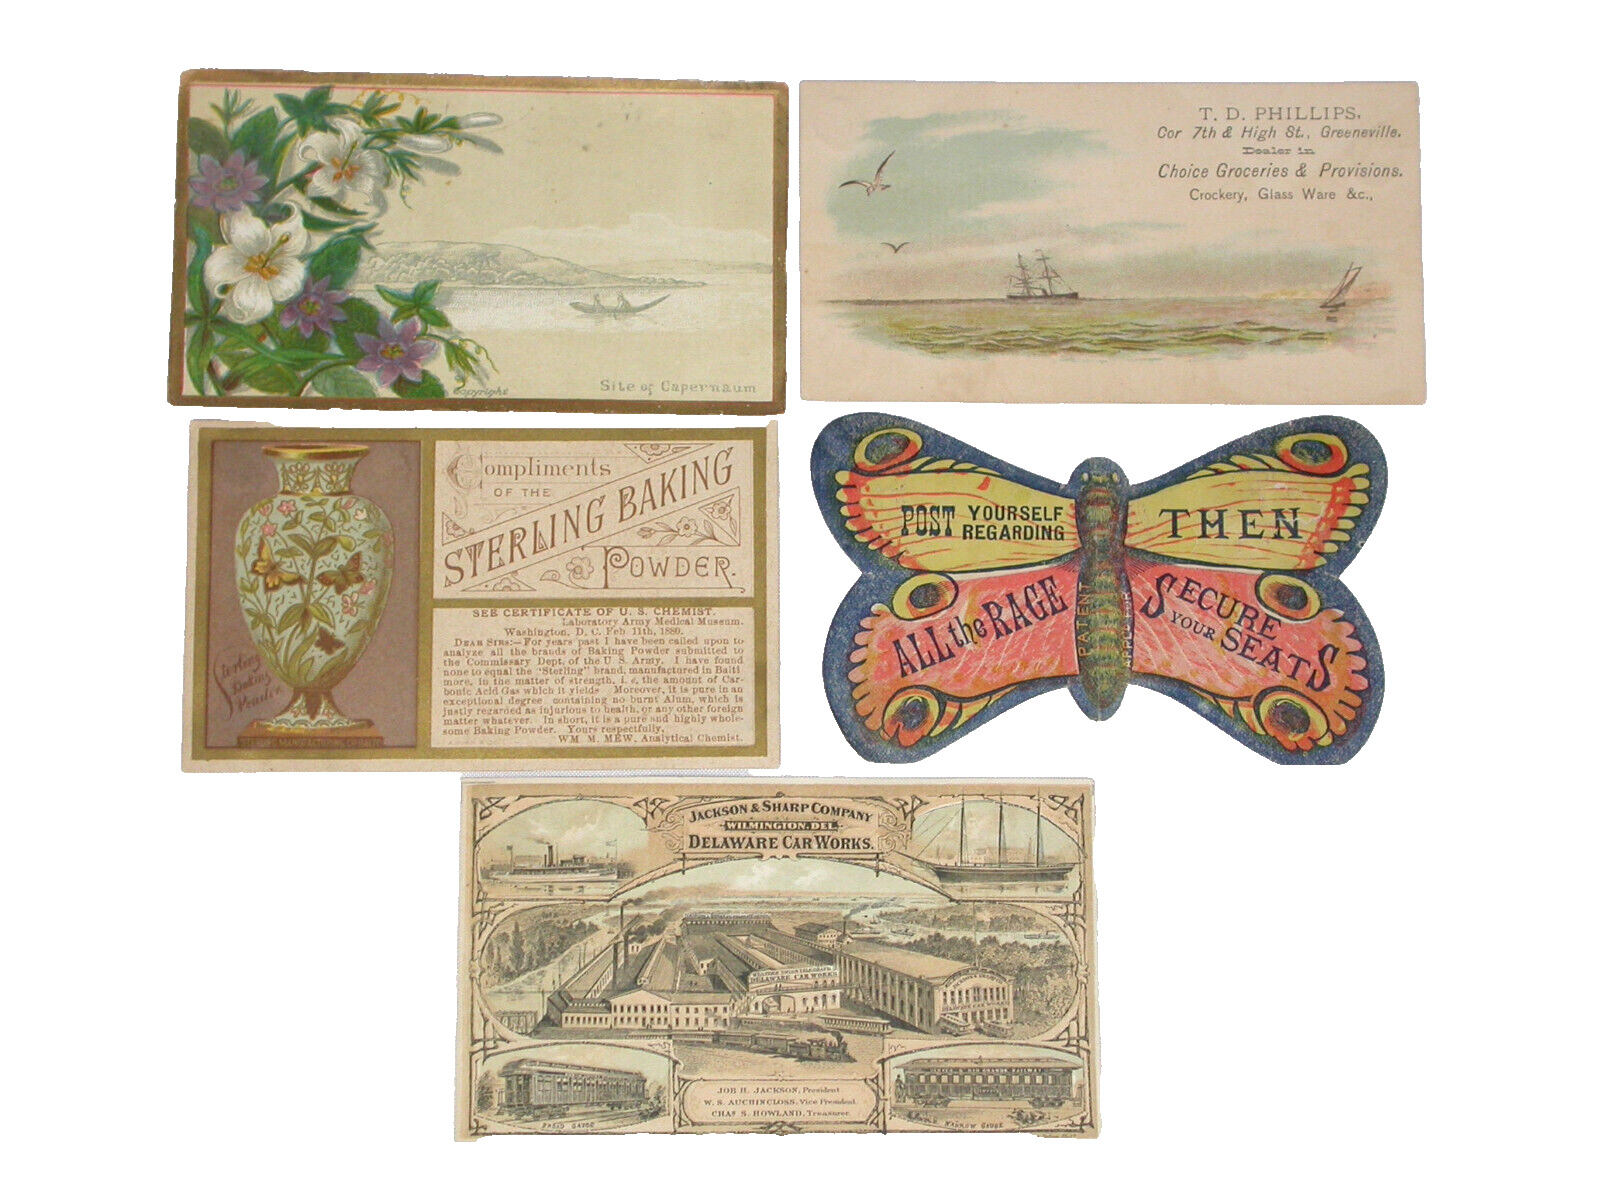 1900s Trade Card Lot Die Cut Butterfly Sterling Baking Powder Delaware Car Works